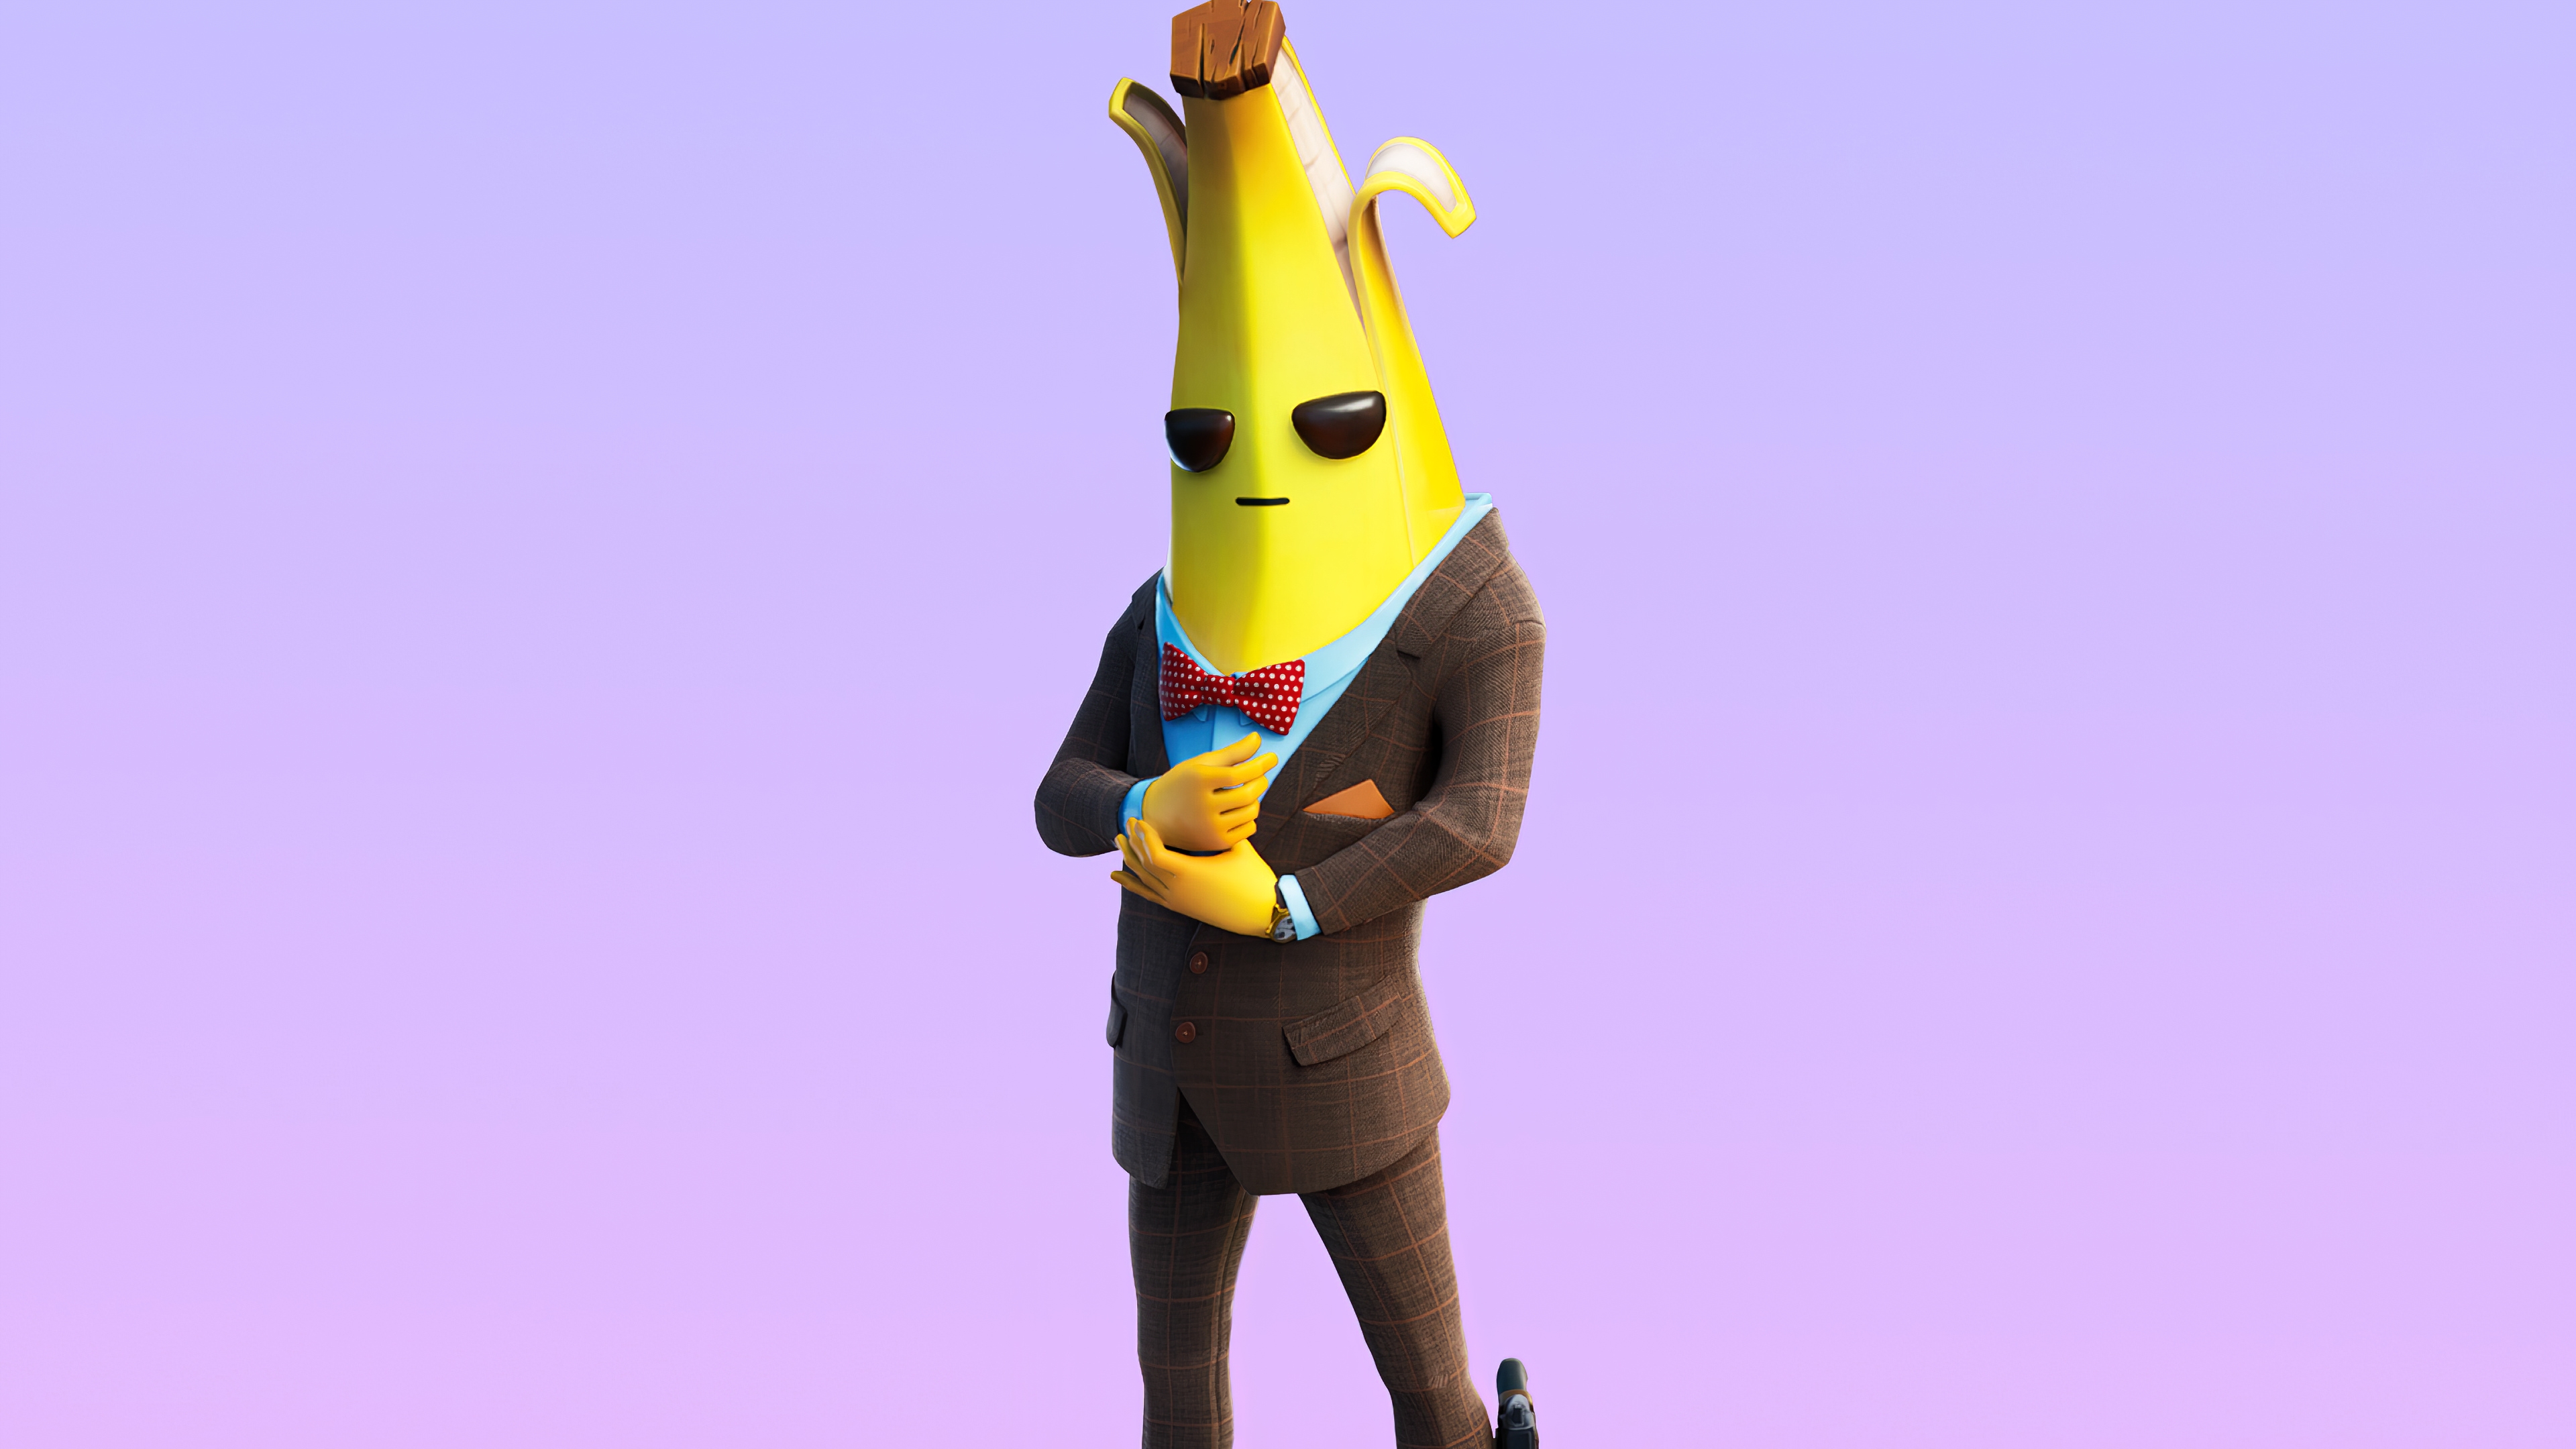 Задания банана фортнайт. Агент банан из ФОРТНАЙТ. Peely ФОРТНАЙТ. ФОРТНАЙТ персонажи банан агент. Агент банан ФОРТНАЙТ скин.